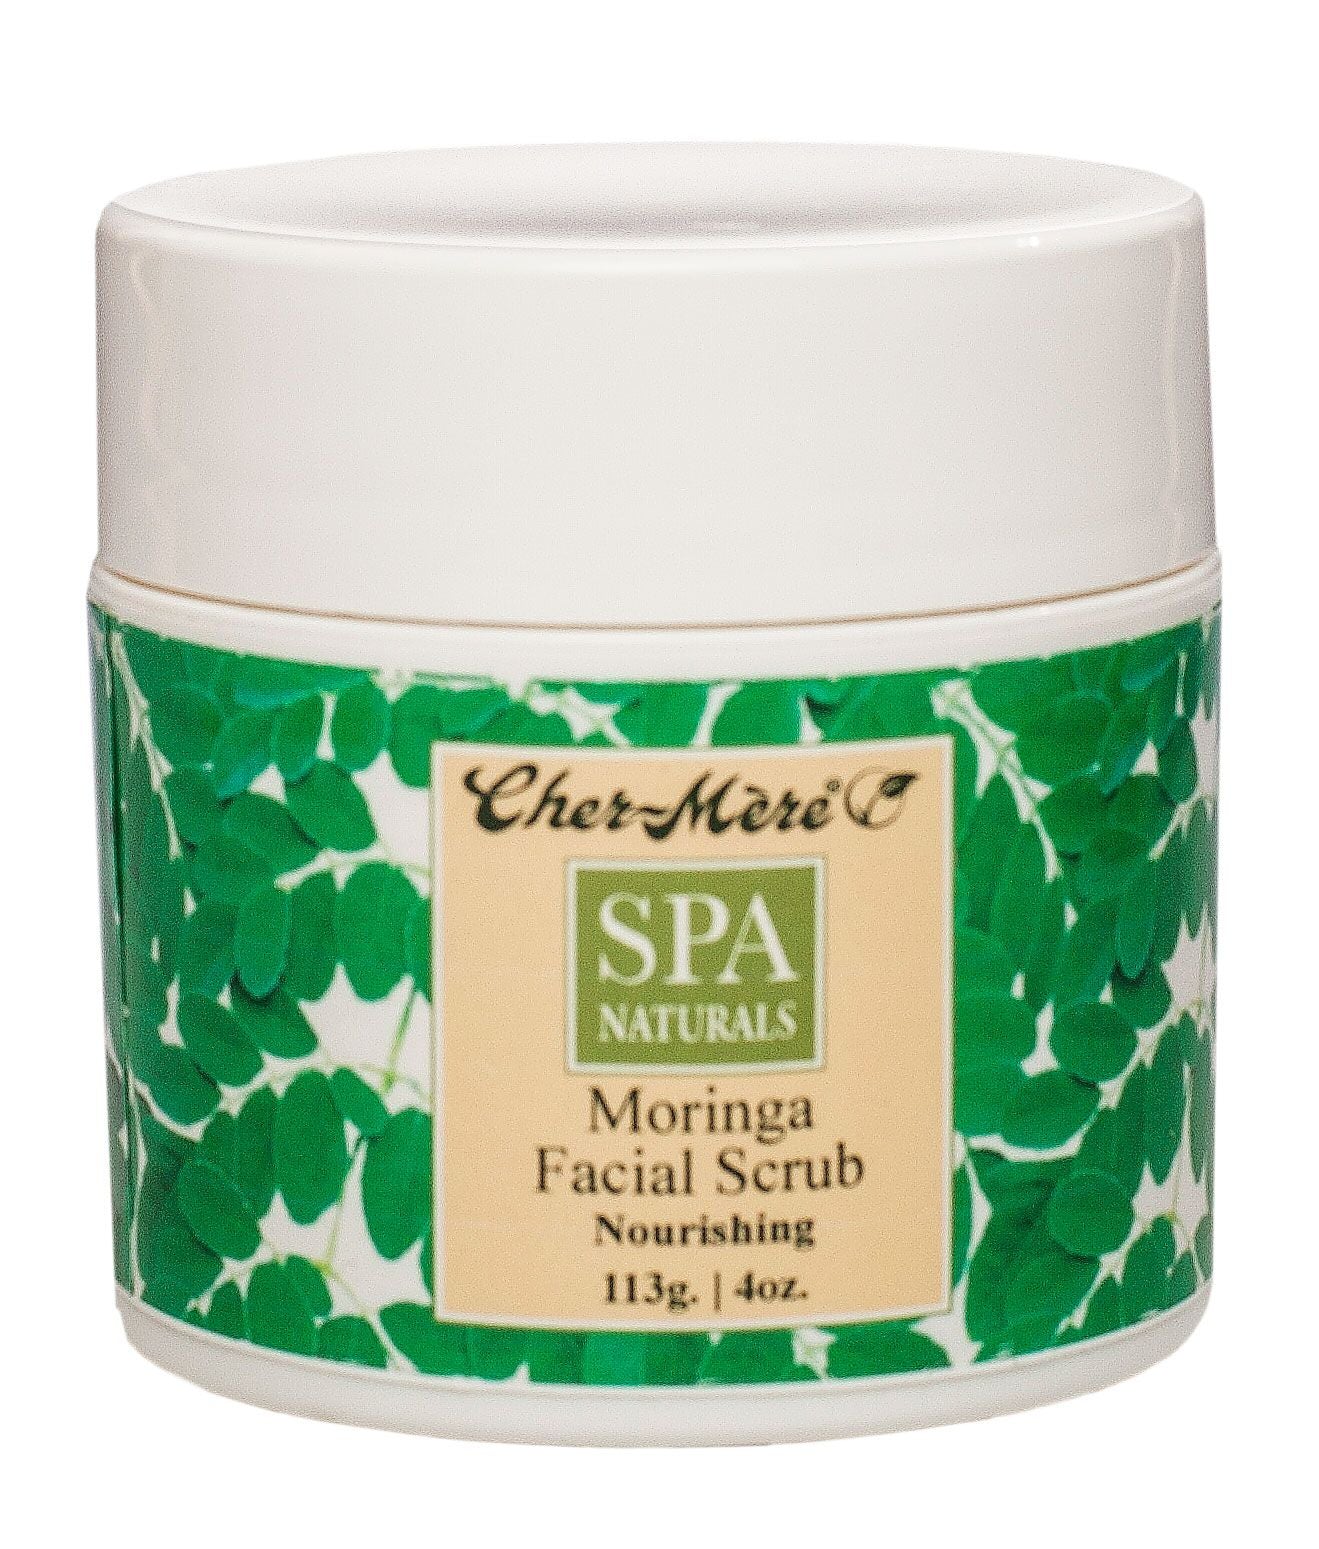 Spa Naturals Moringa Face Scrub (113g) - Cher-Mere